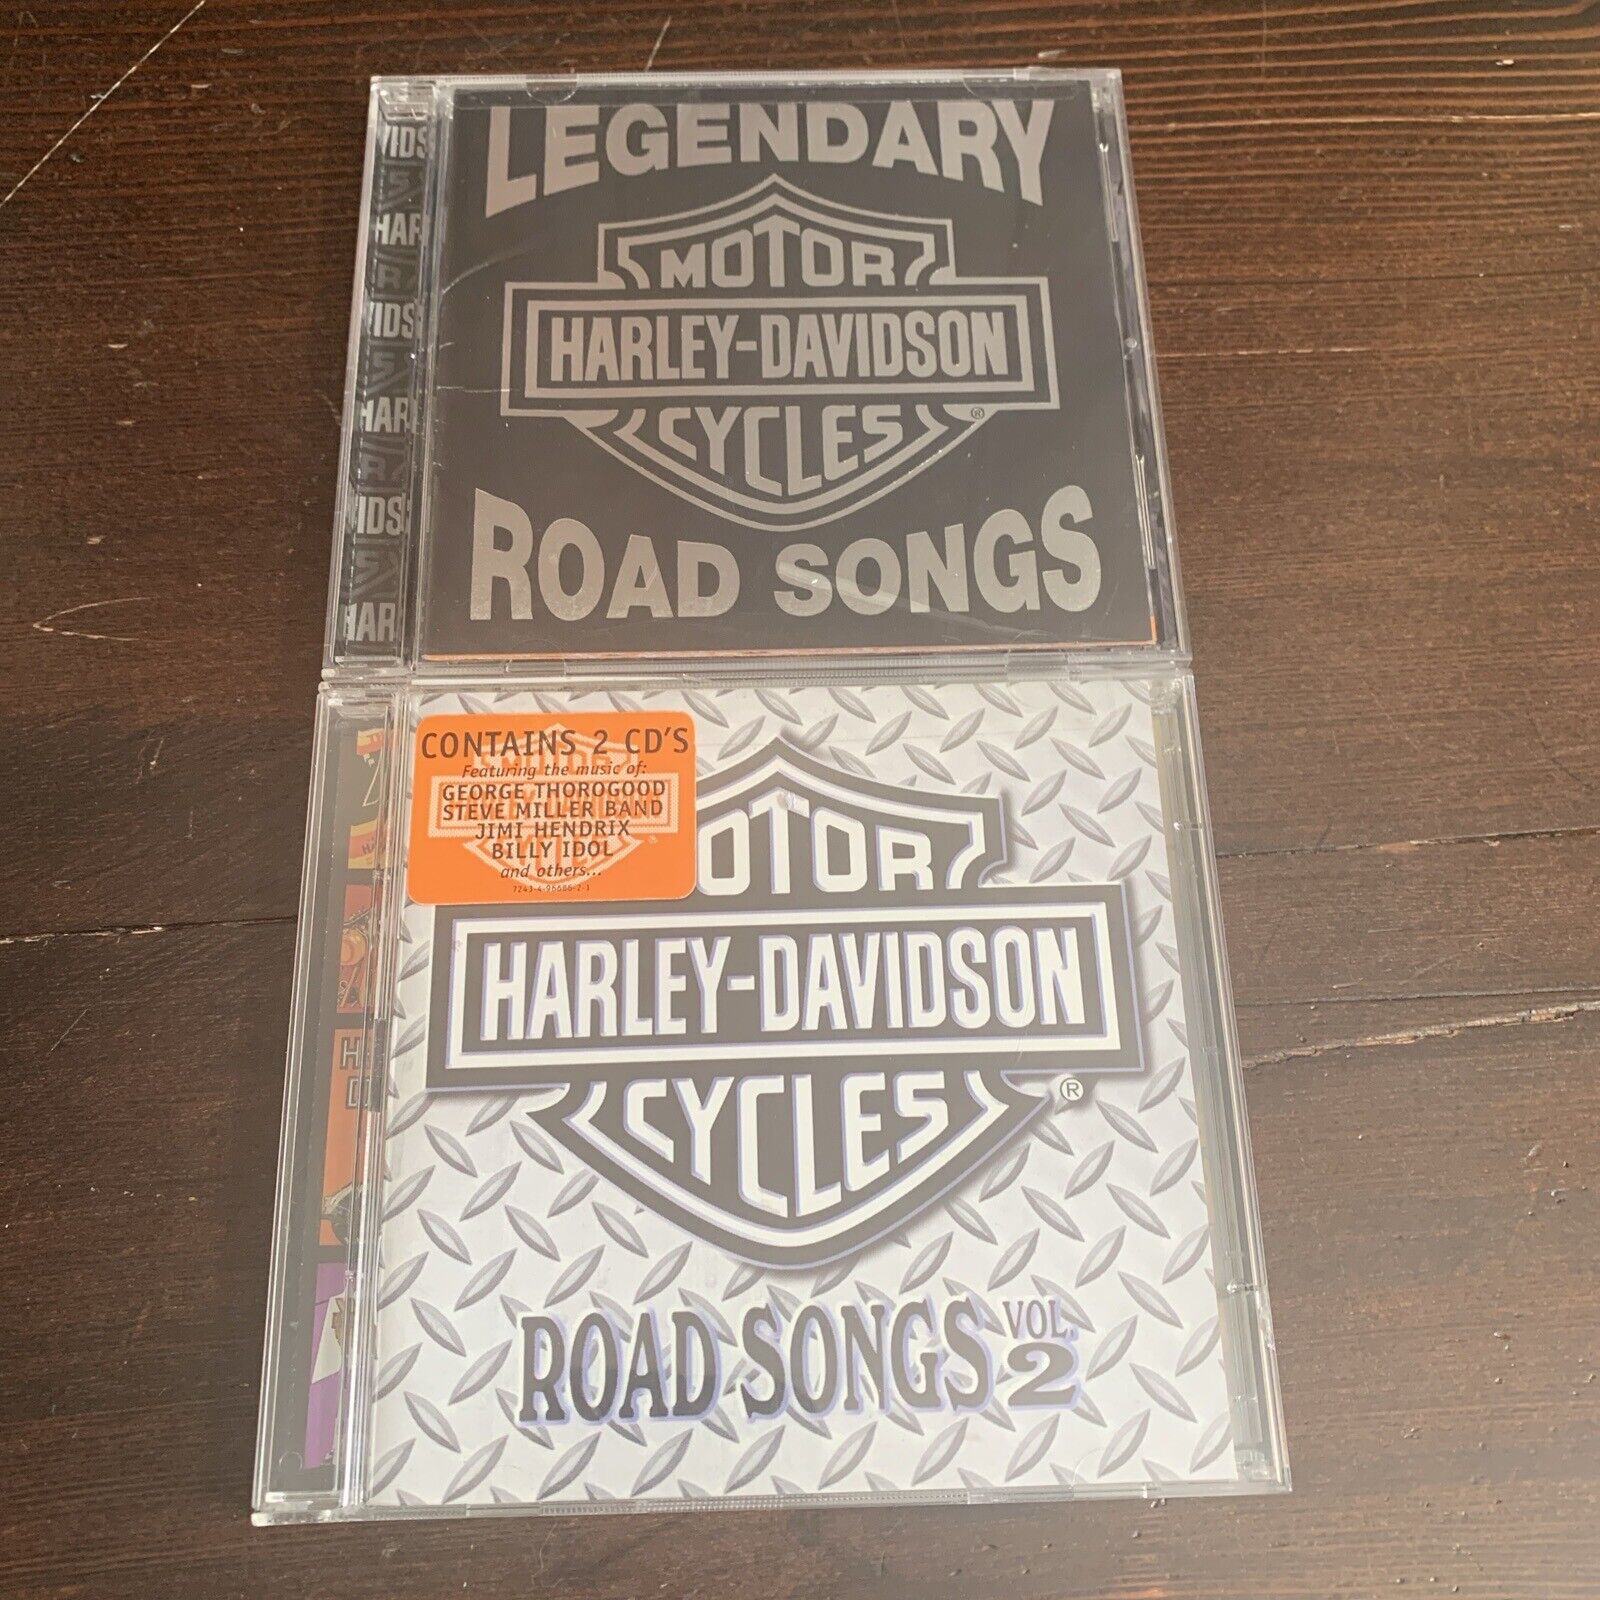 Harley-Davidson Cycles: Road Songs, Vol. 1 & 2 CDs Whitesnake ZZ Top Bob Seger